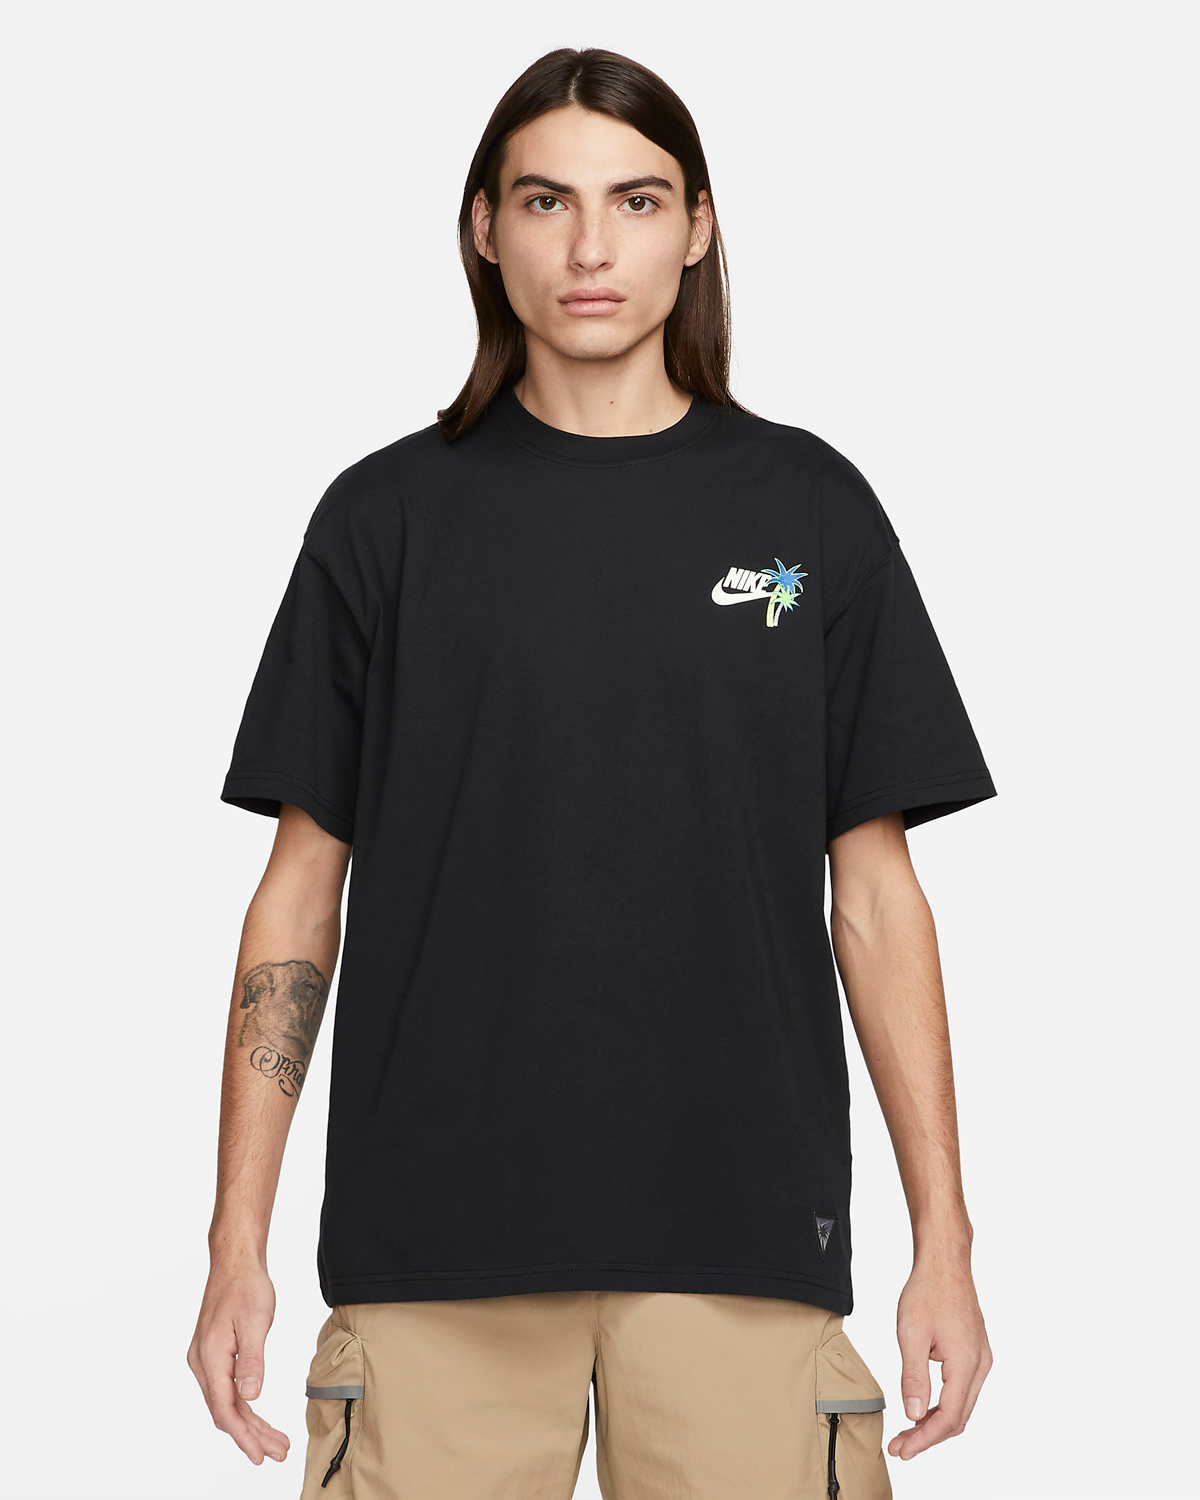 Nike-Sportswear-Surf-Dog-T-Shirt-Black-1